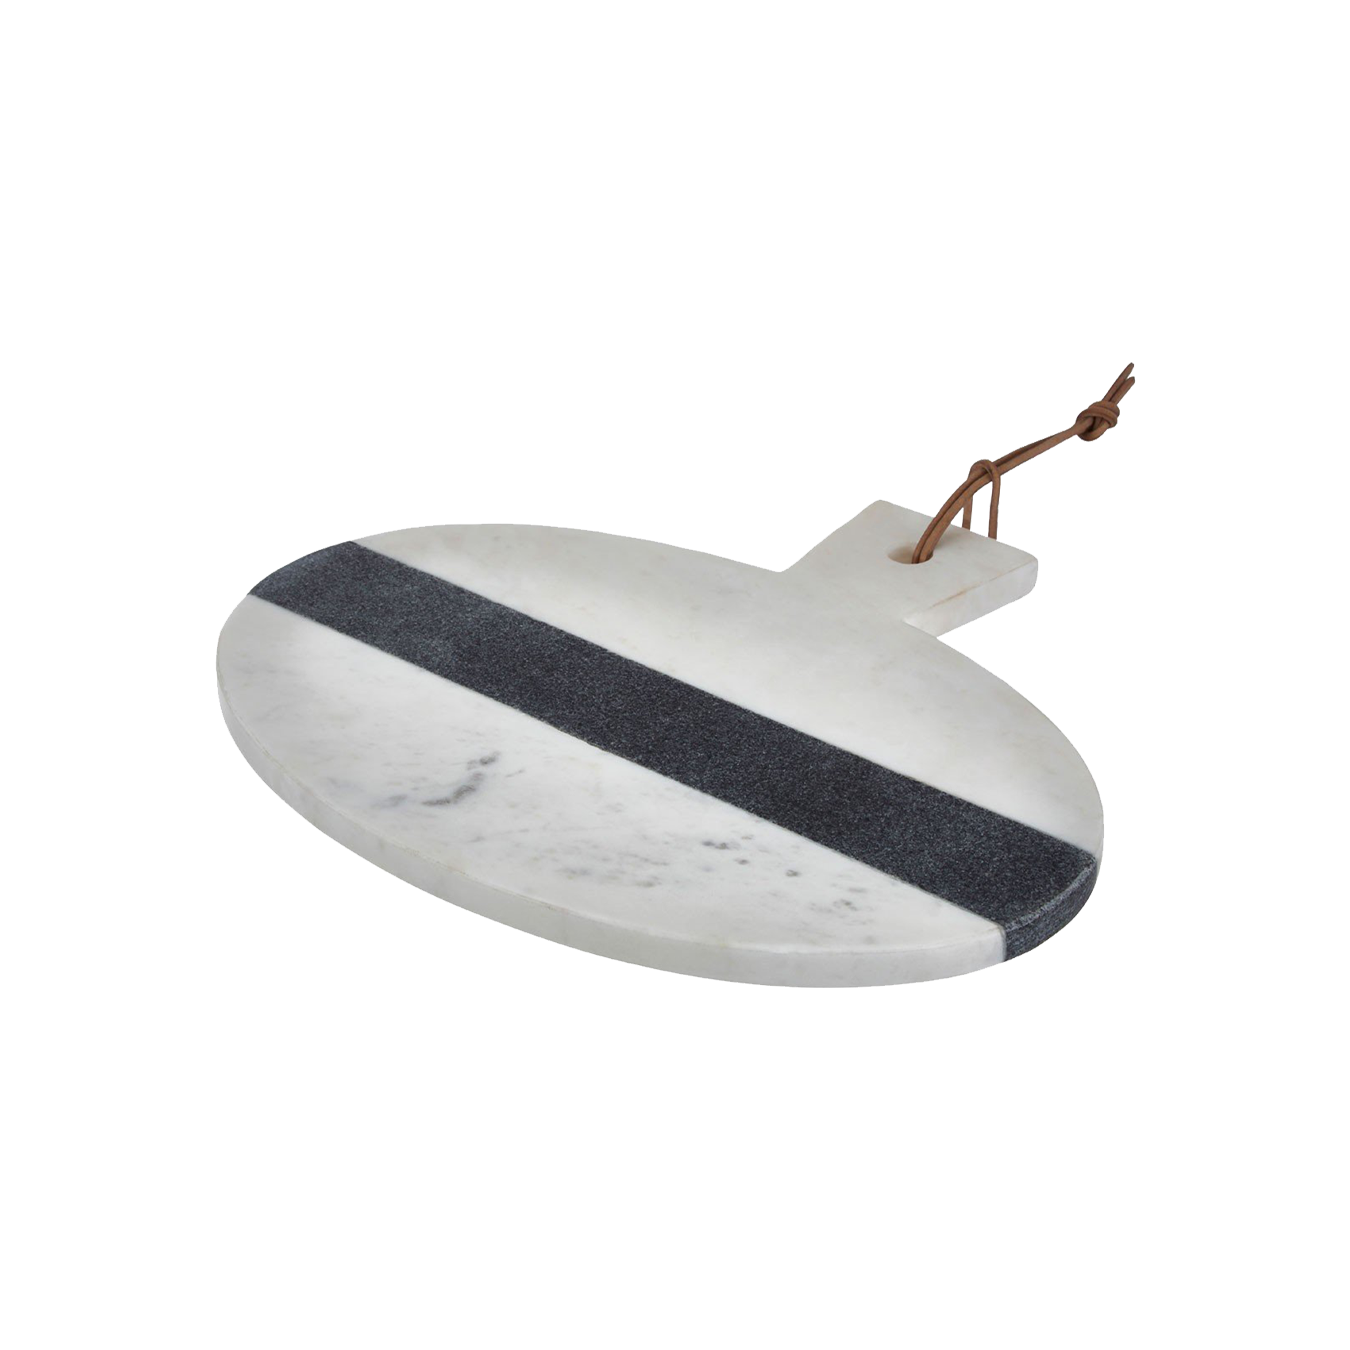 White & Dark Grey Monochrome Paddle Board